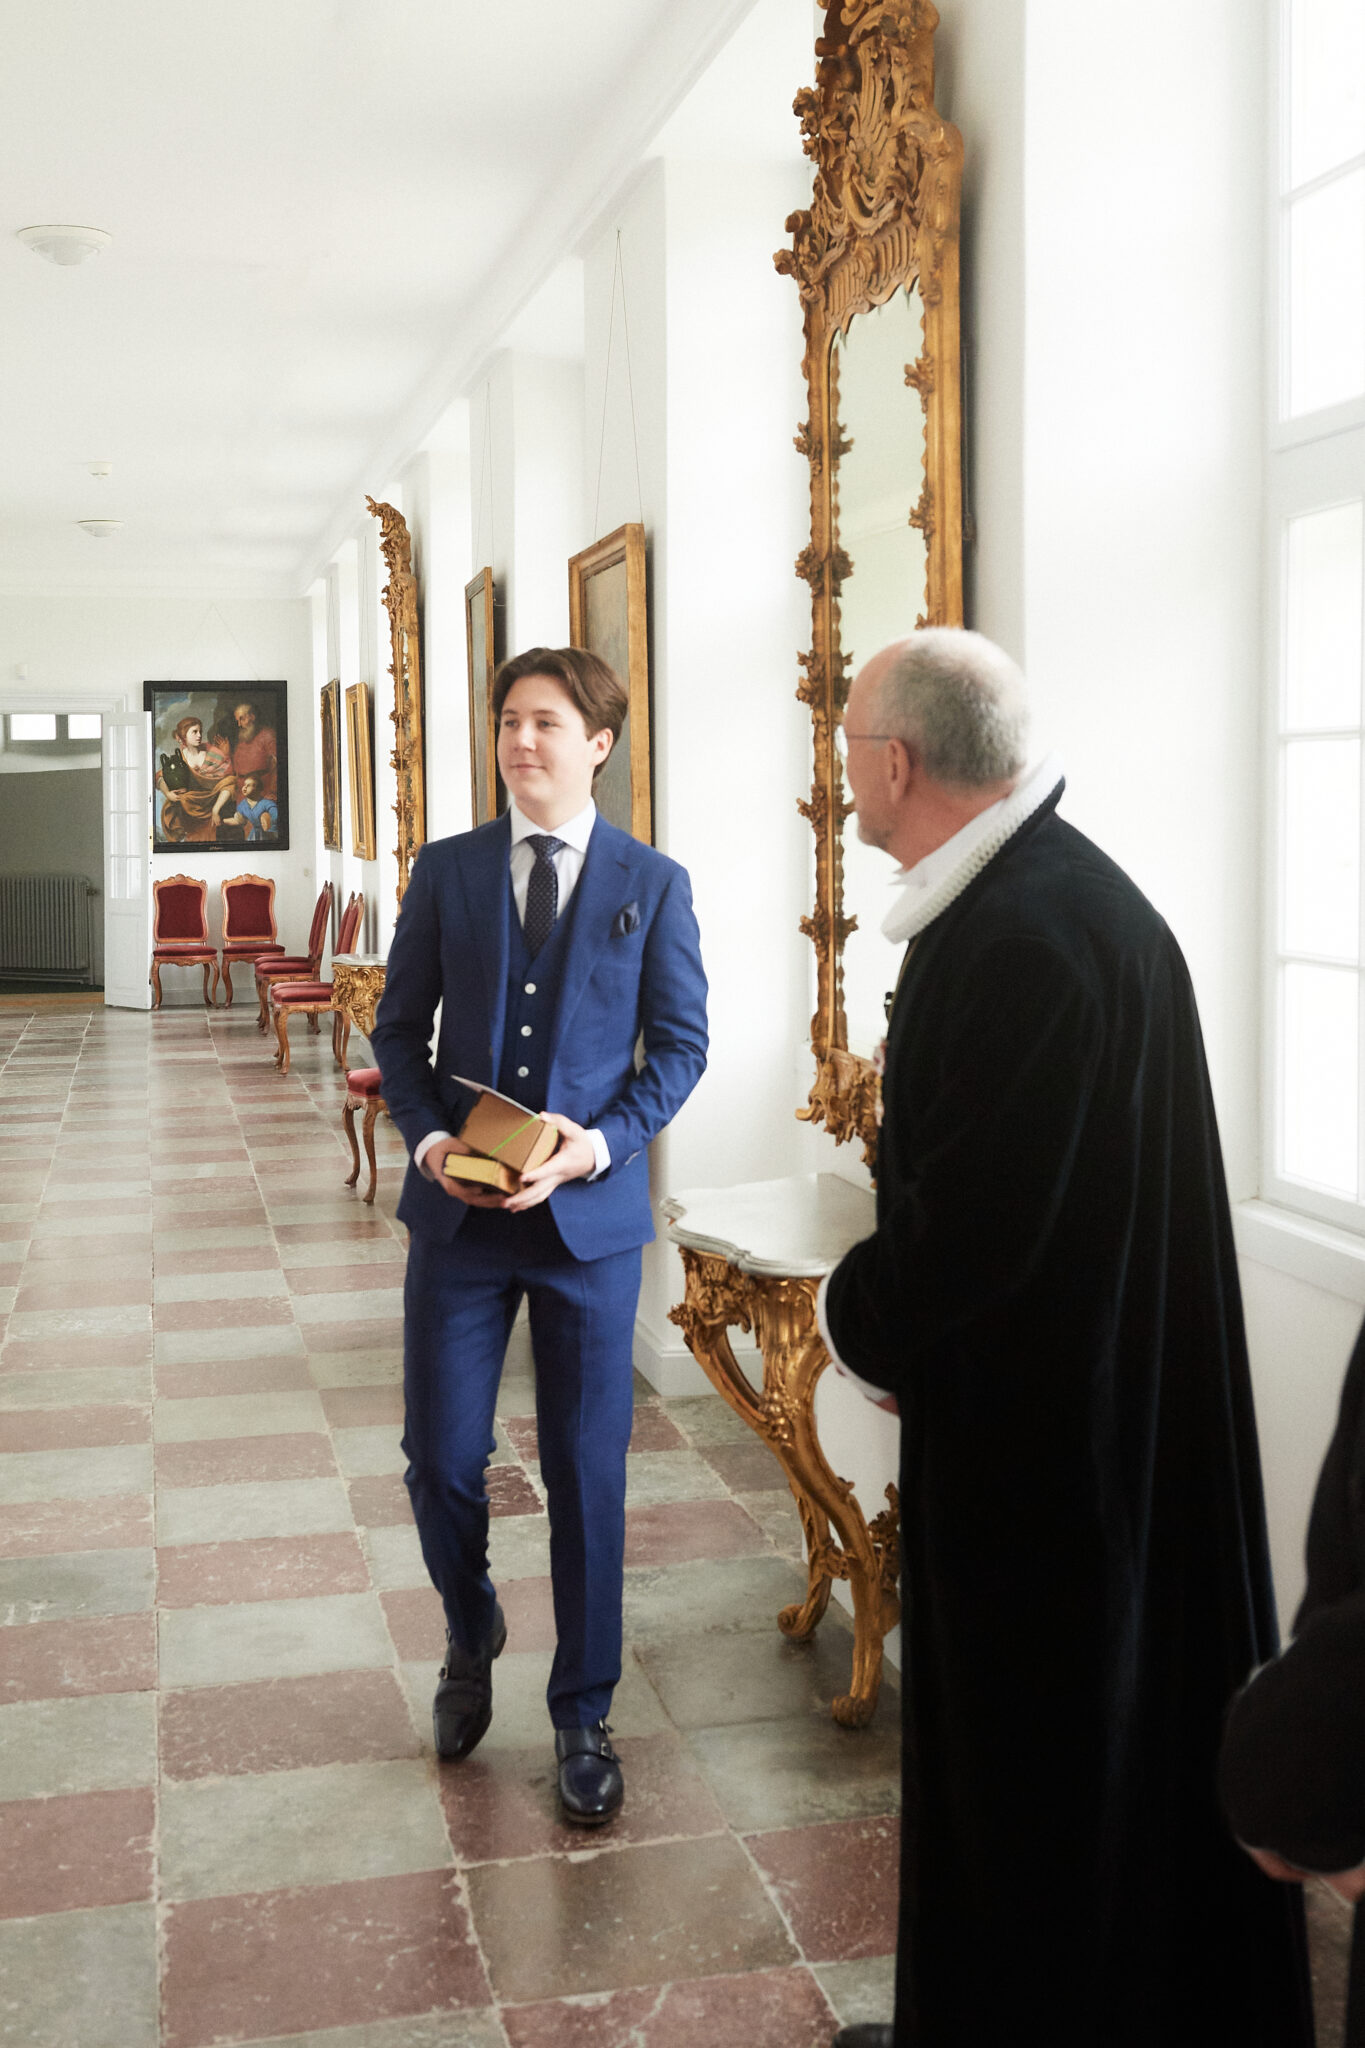 Gallery Prince Christian confirmed into Church of Denmark Royal Central